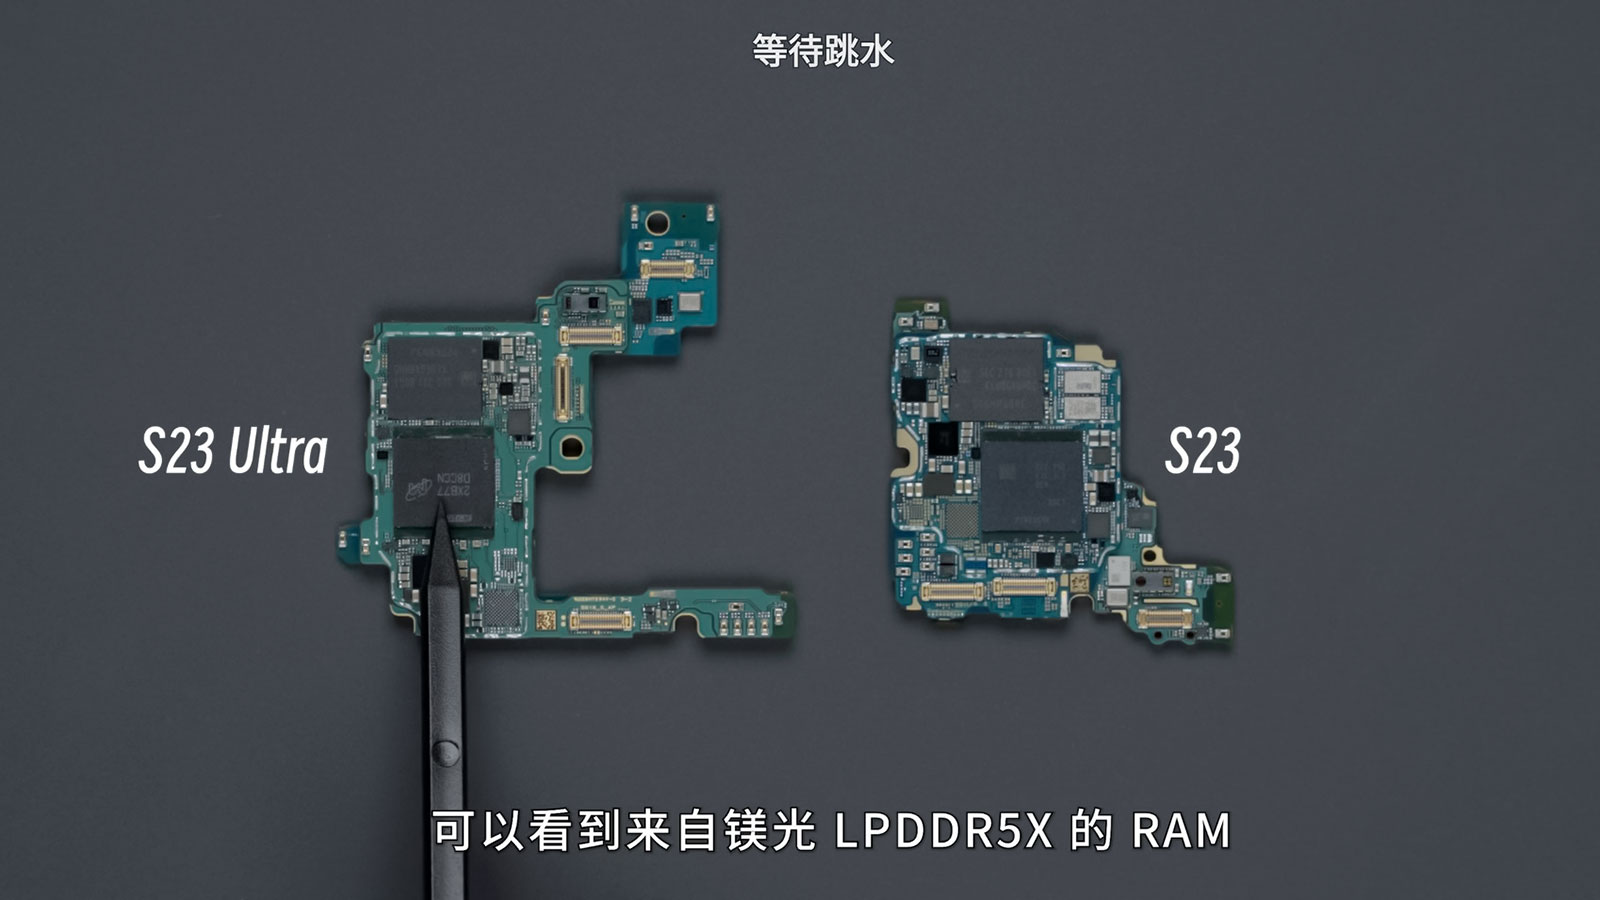 حافظه رم LPDDR5X گلکسی اس ۲۳ اولترا ساخت سامسونگ نیست!